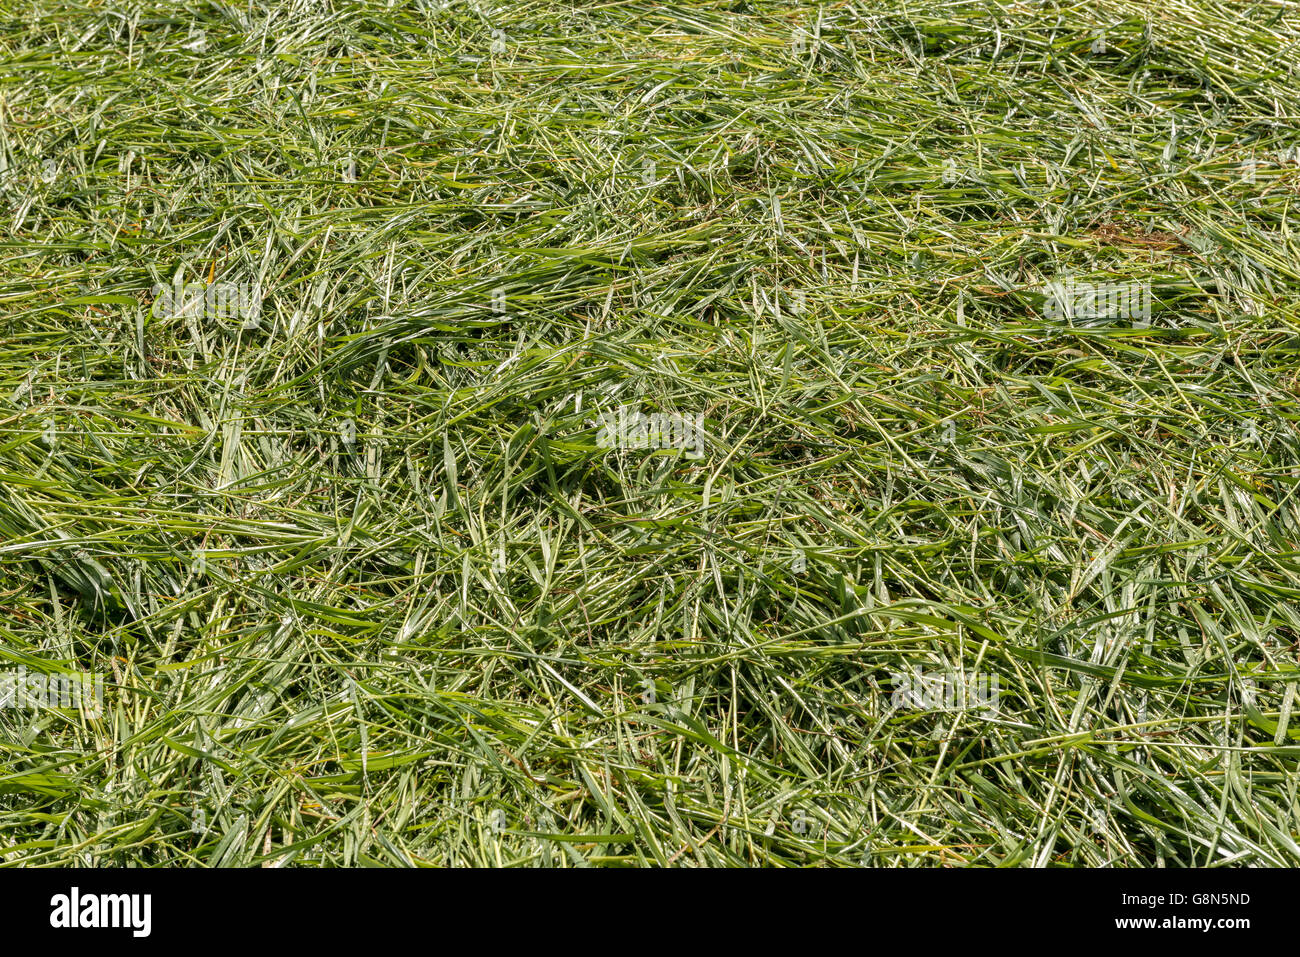 Appena falciata foraggi prati, prati con erba scythed per essiccazione, Hesse, Germania Foto Stock